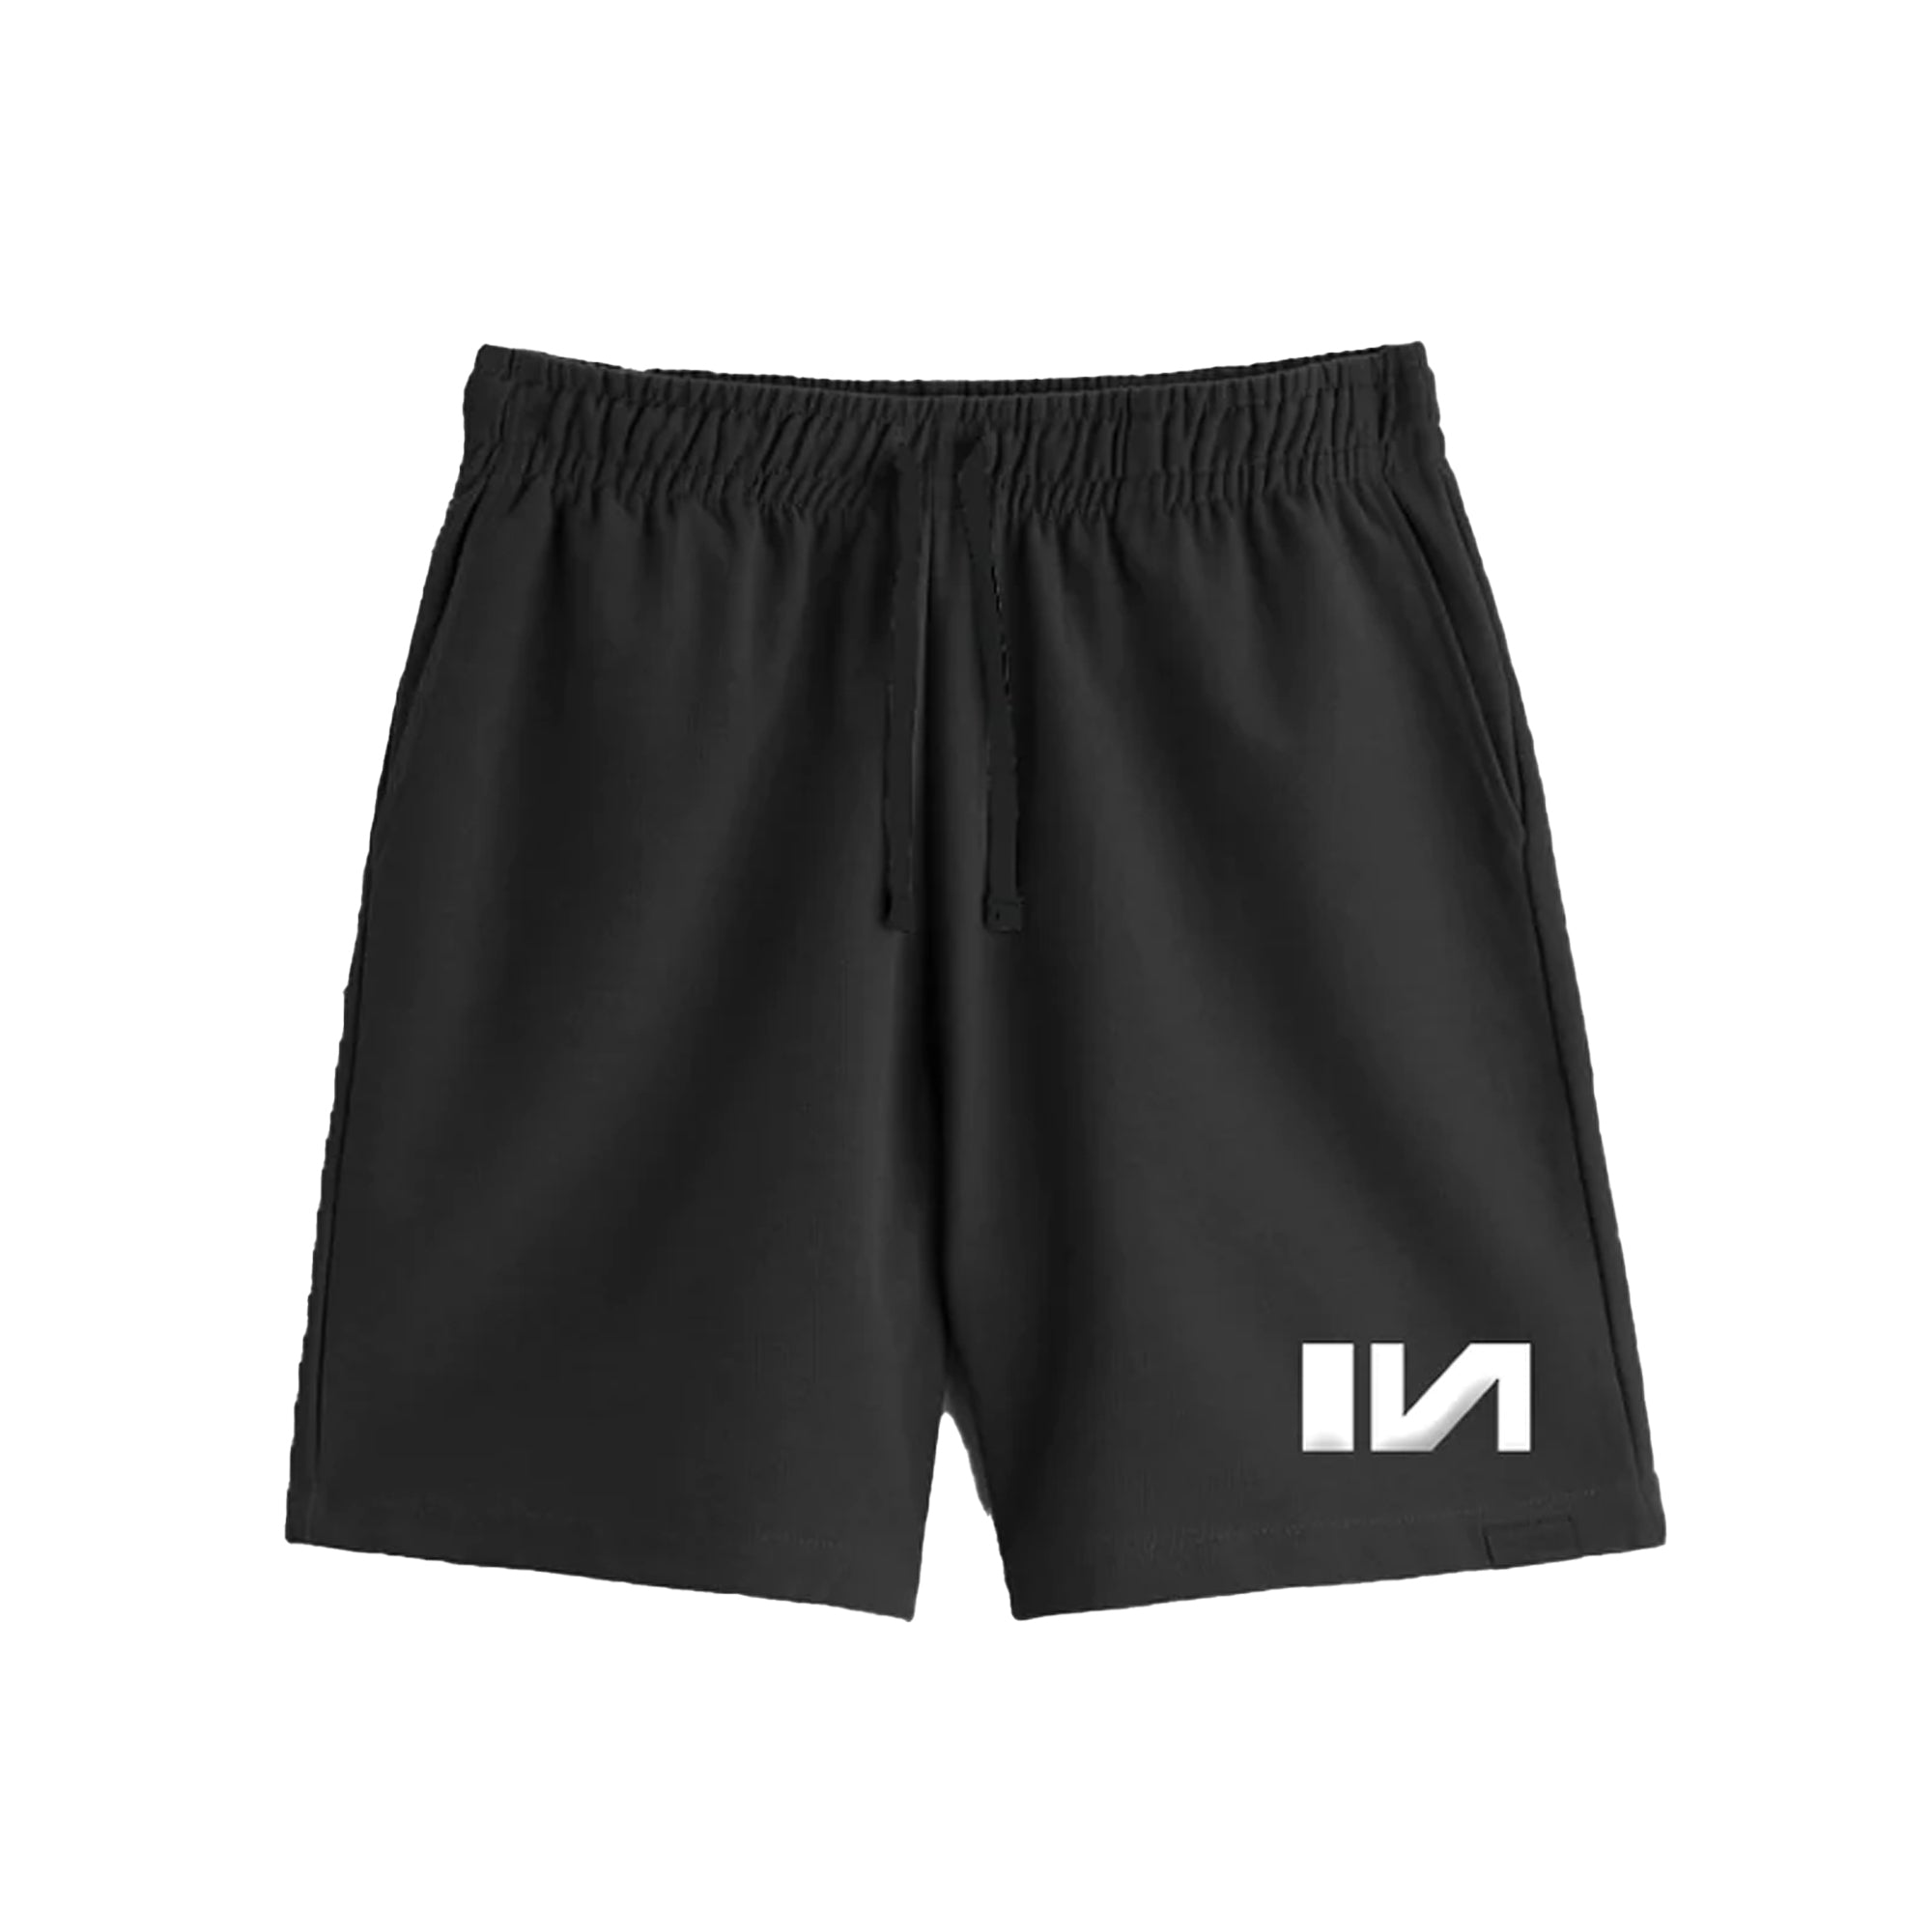 Shorts - IИ Classic Black